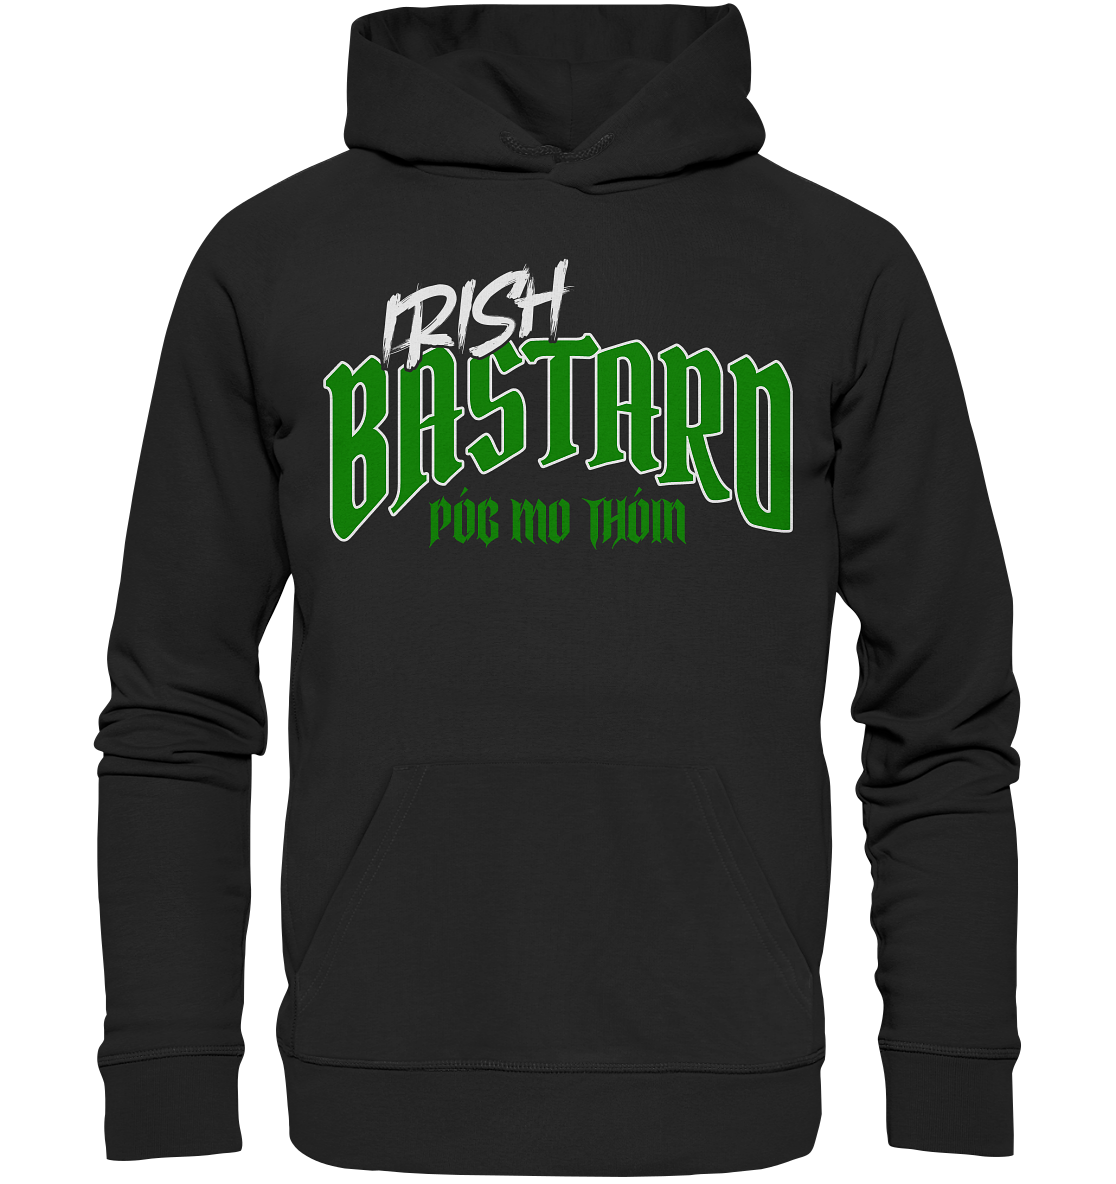 Póg Mo Thóin Streetwear "Irish Bastard" - Premium Unisex Hoodie